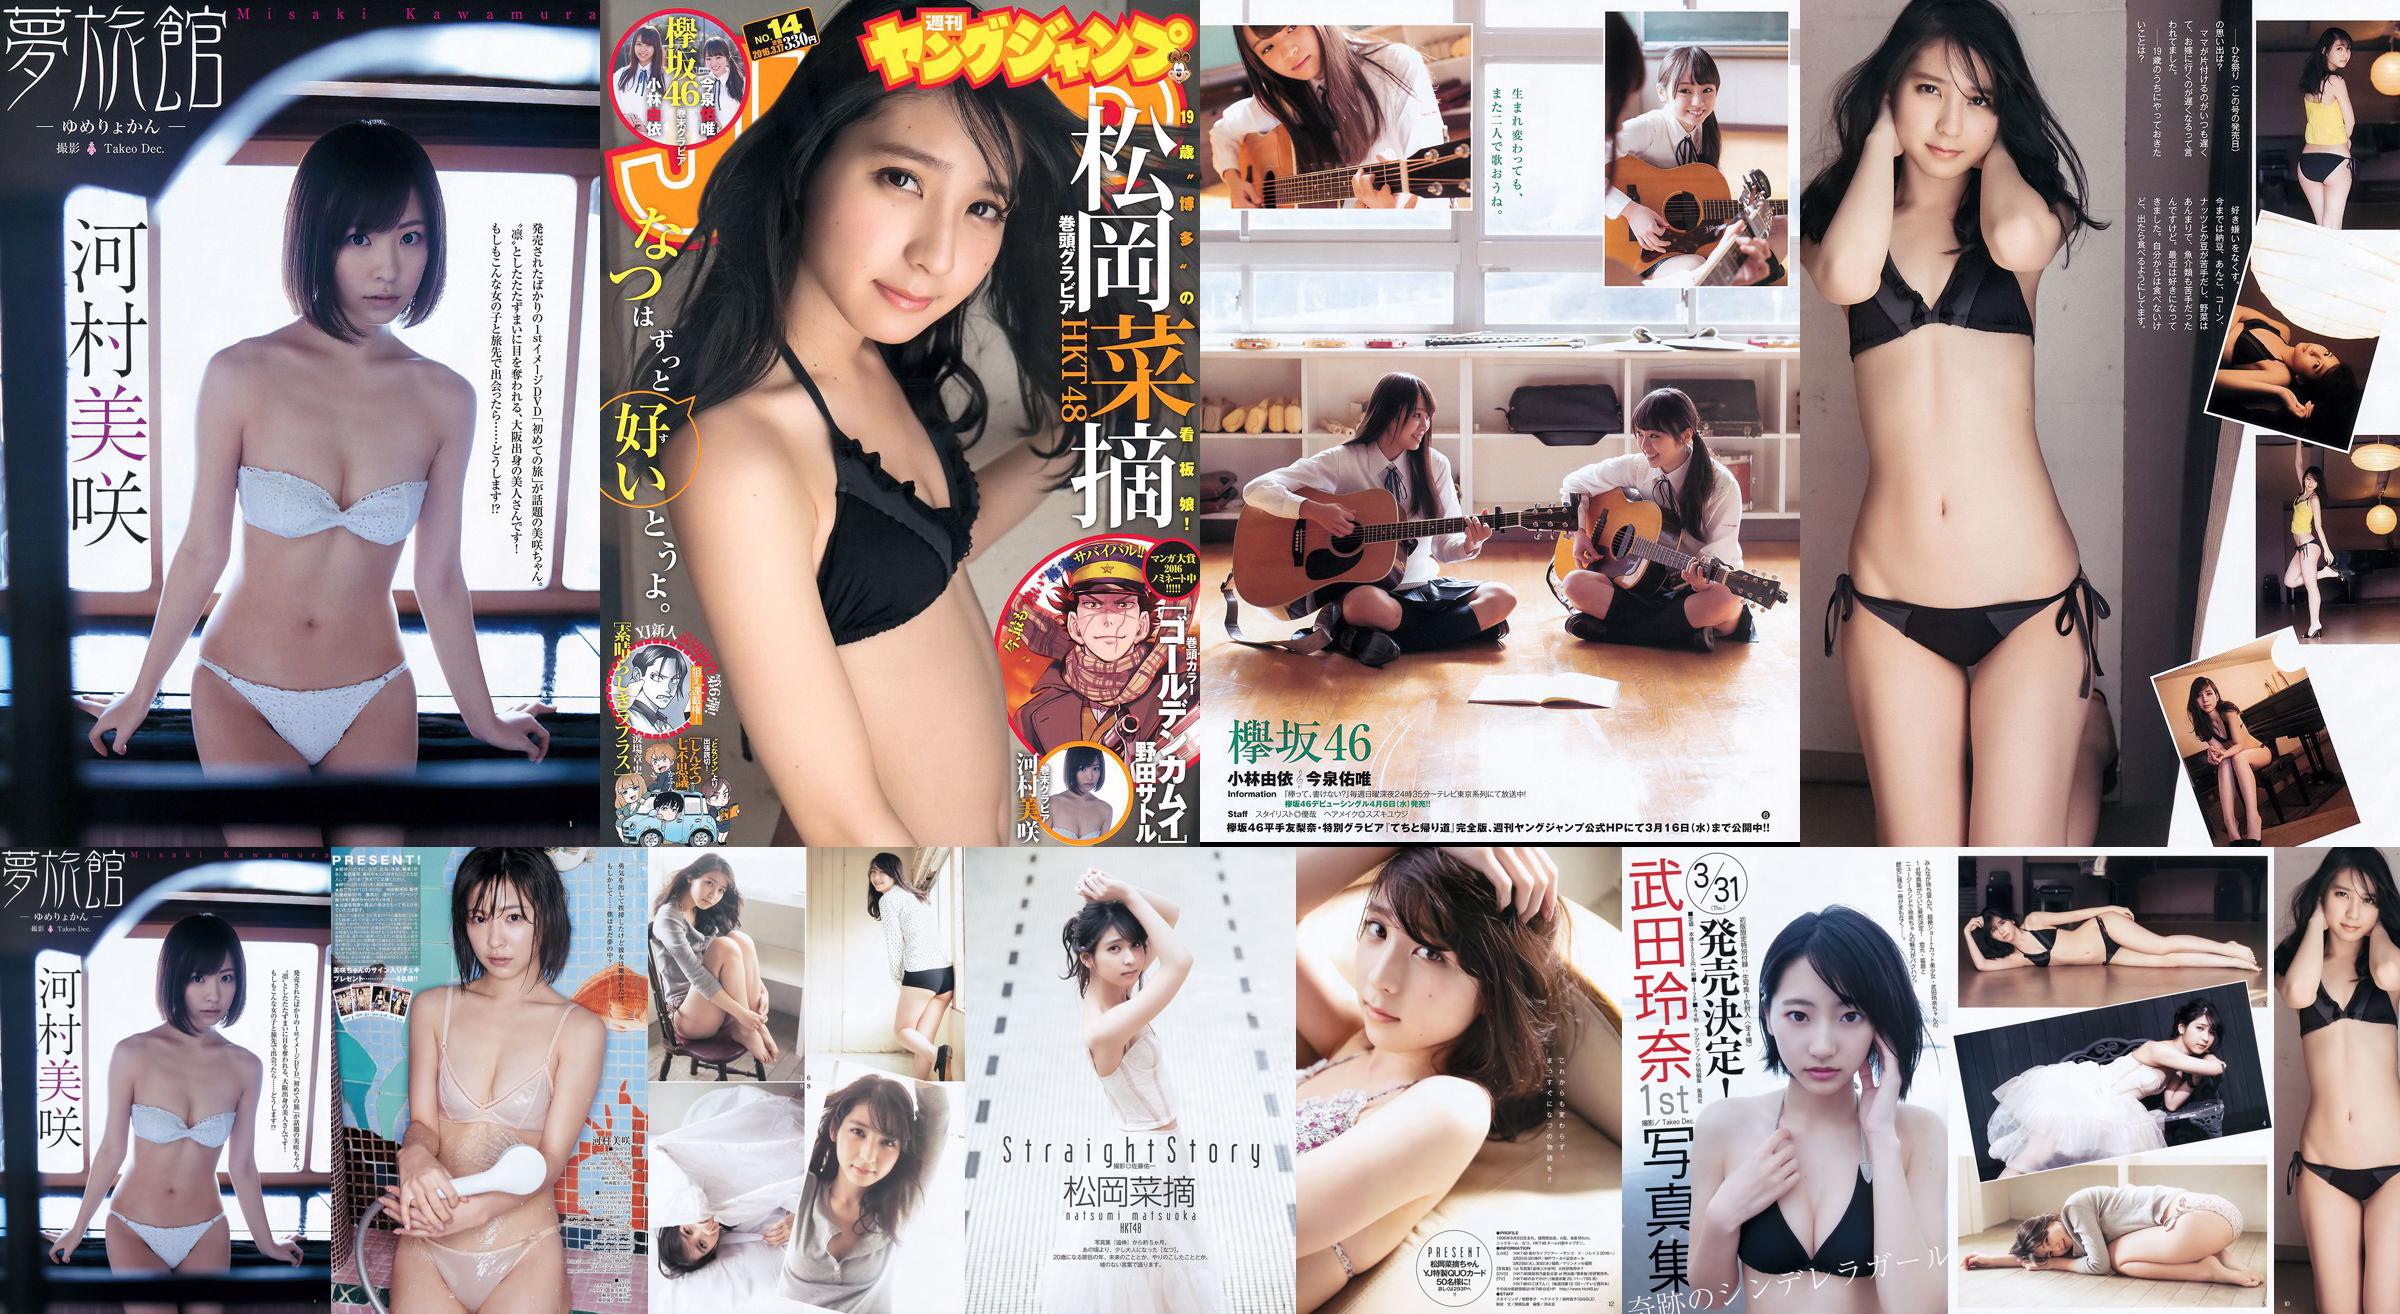 Pilihan Sayur Muraoka Yui Kobayashi Yui Imaizumi Misaki Kawamura [Lompat Muda Mingguan] Majalah Foto No. 14 2016 No.3246cf Halaman 1